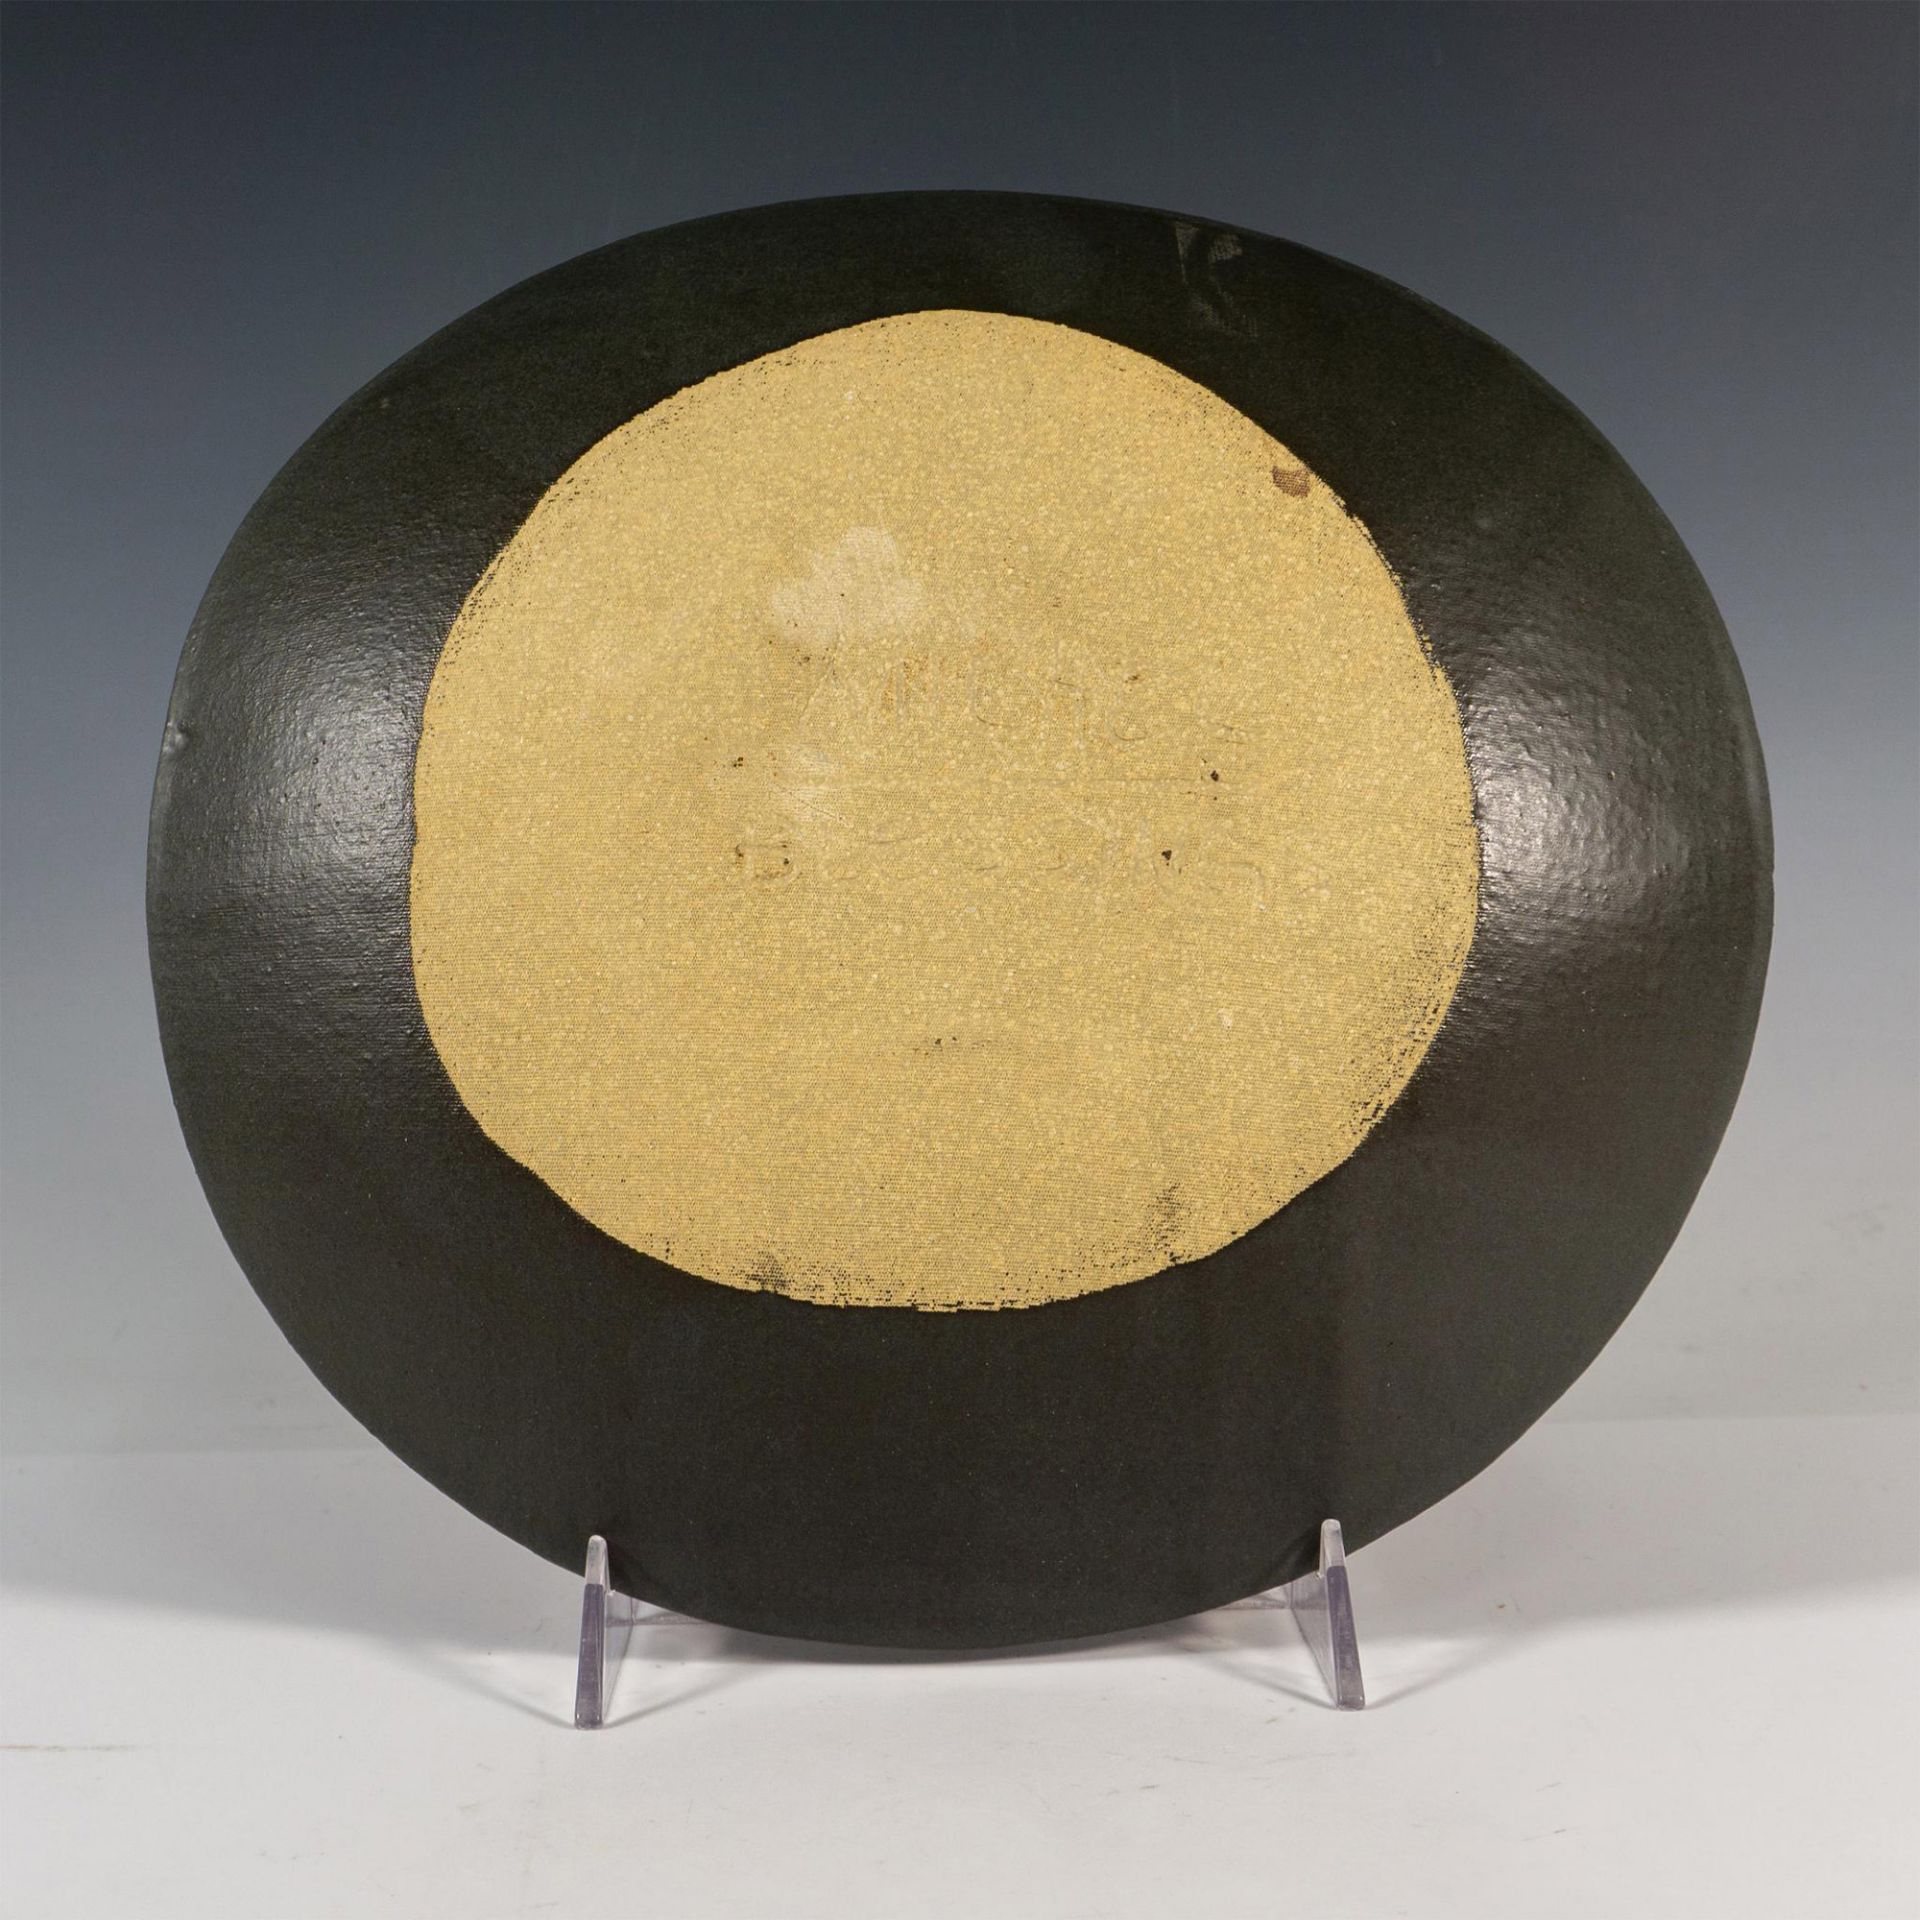 Signed Michel Asian Motif Ceramic Bowl, Blessings - Image 4 of 4